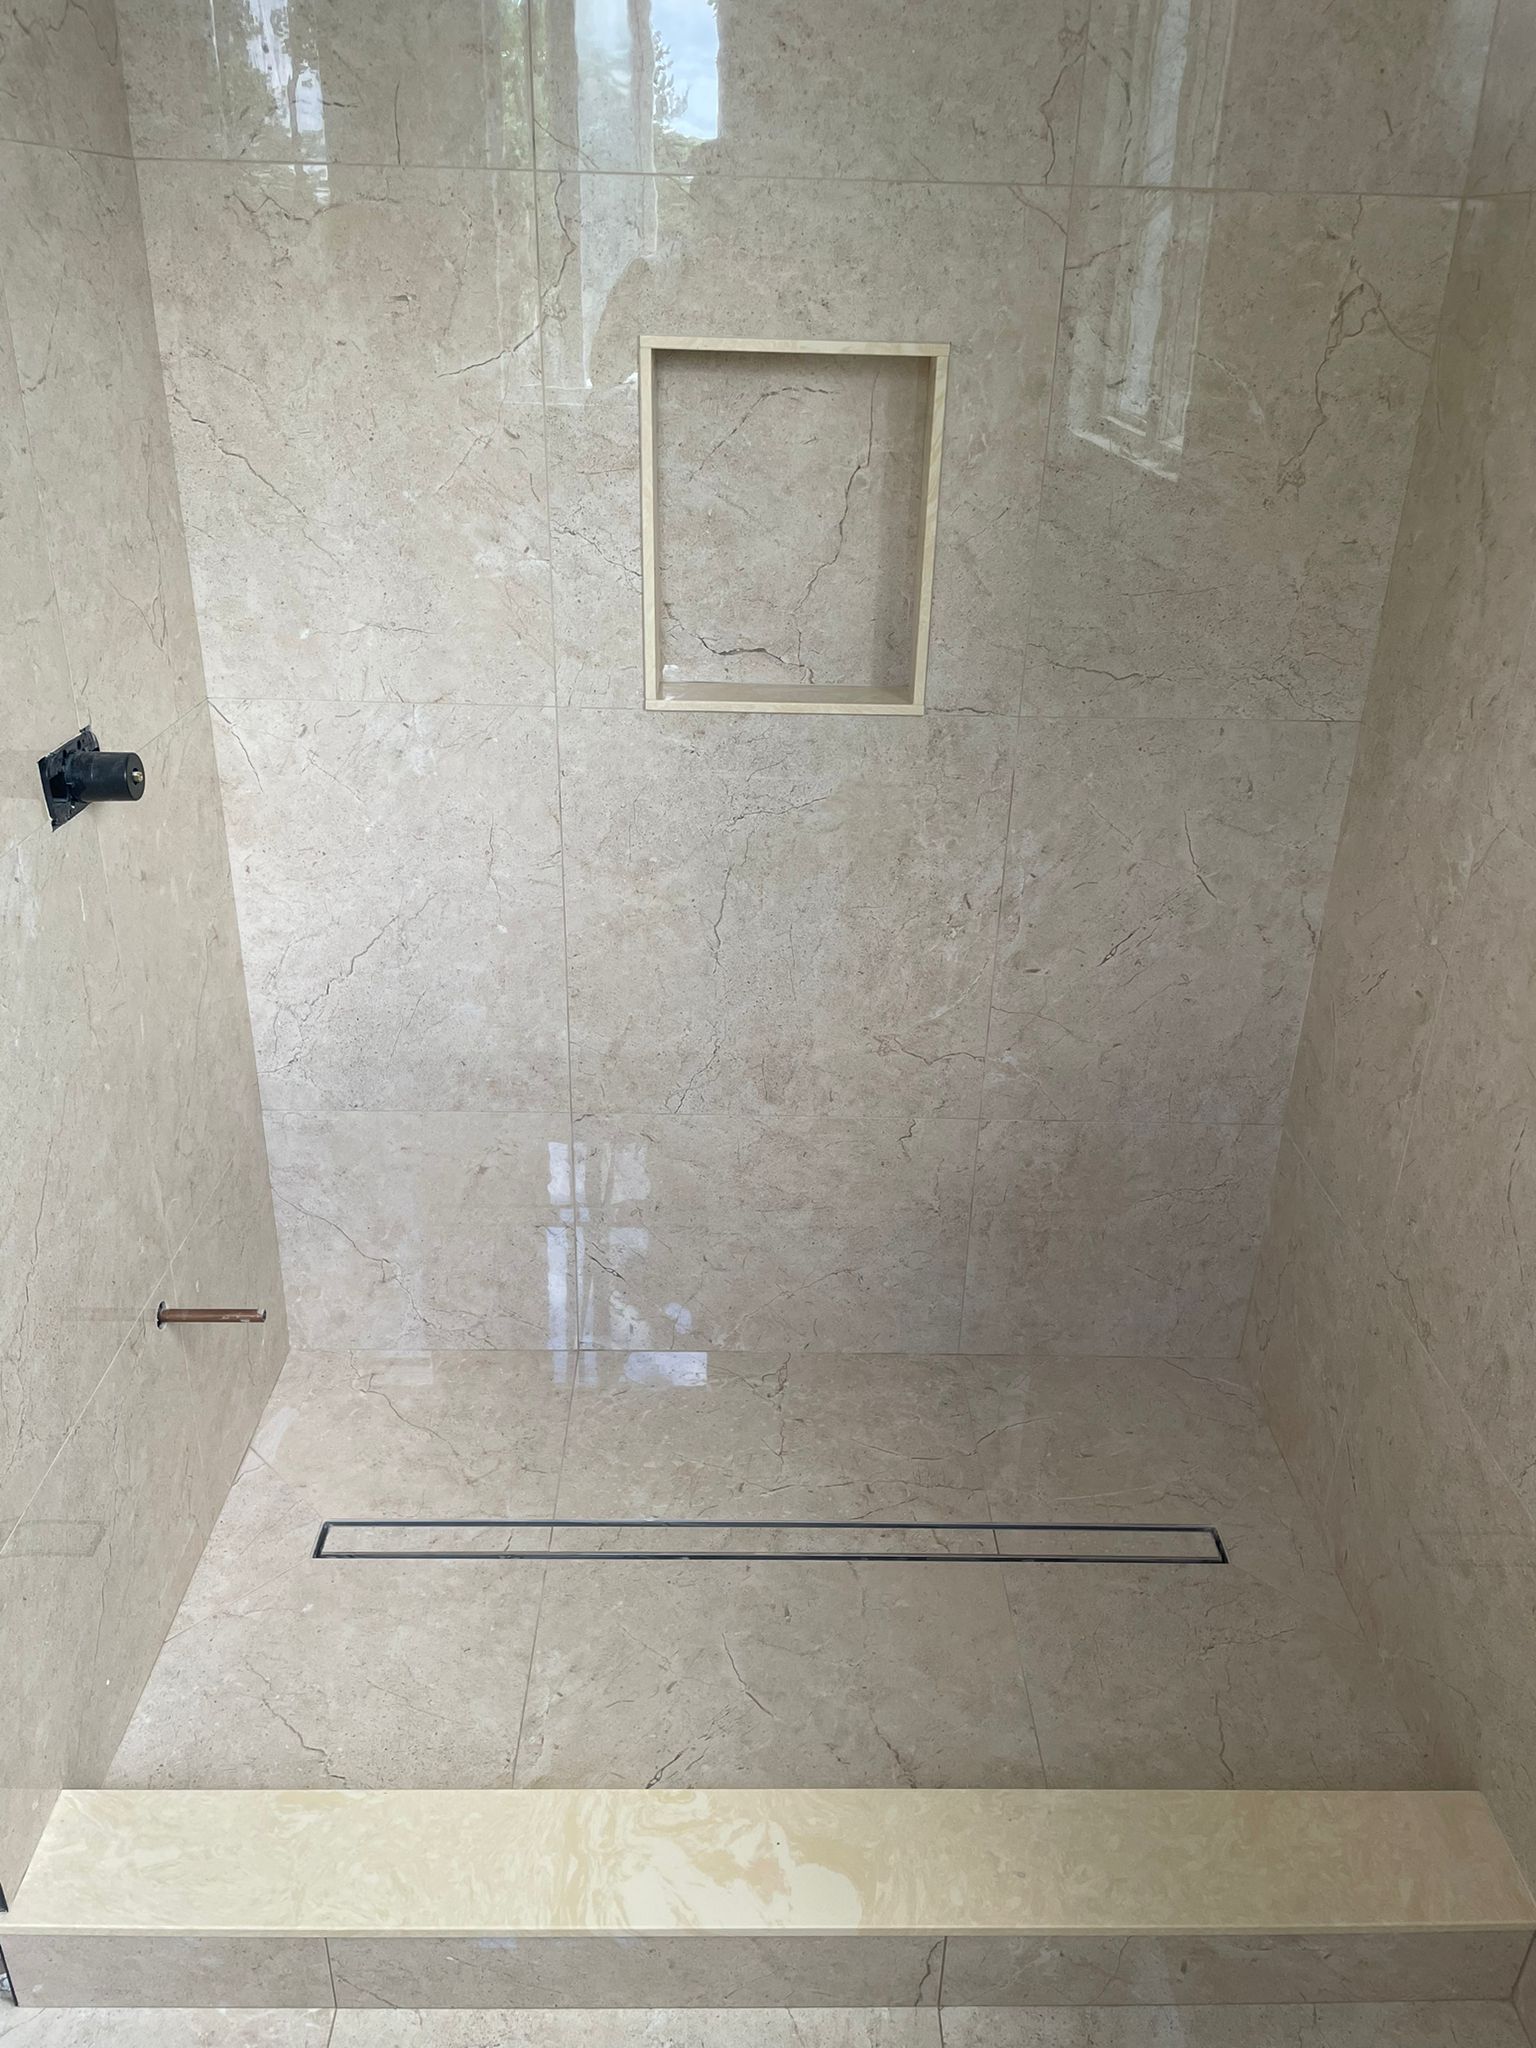 Uxbridge Bathroom tiles installation at Markom Tiles